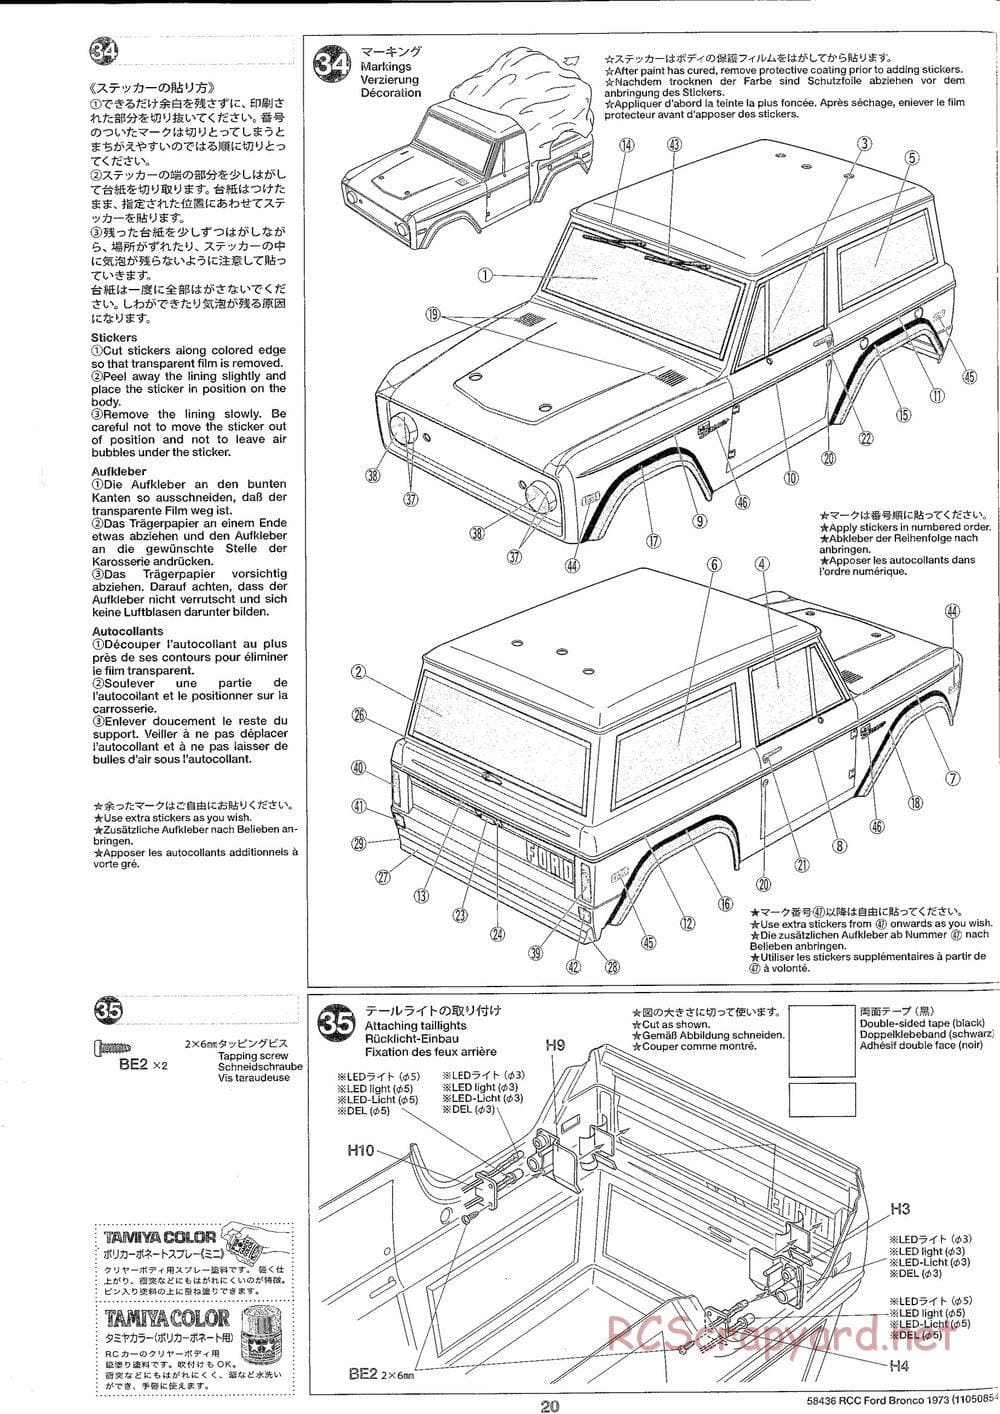 Tamiya - Ford Bronco 1973 - CR-01 Chassis - Manual - Page 20